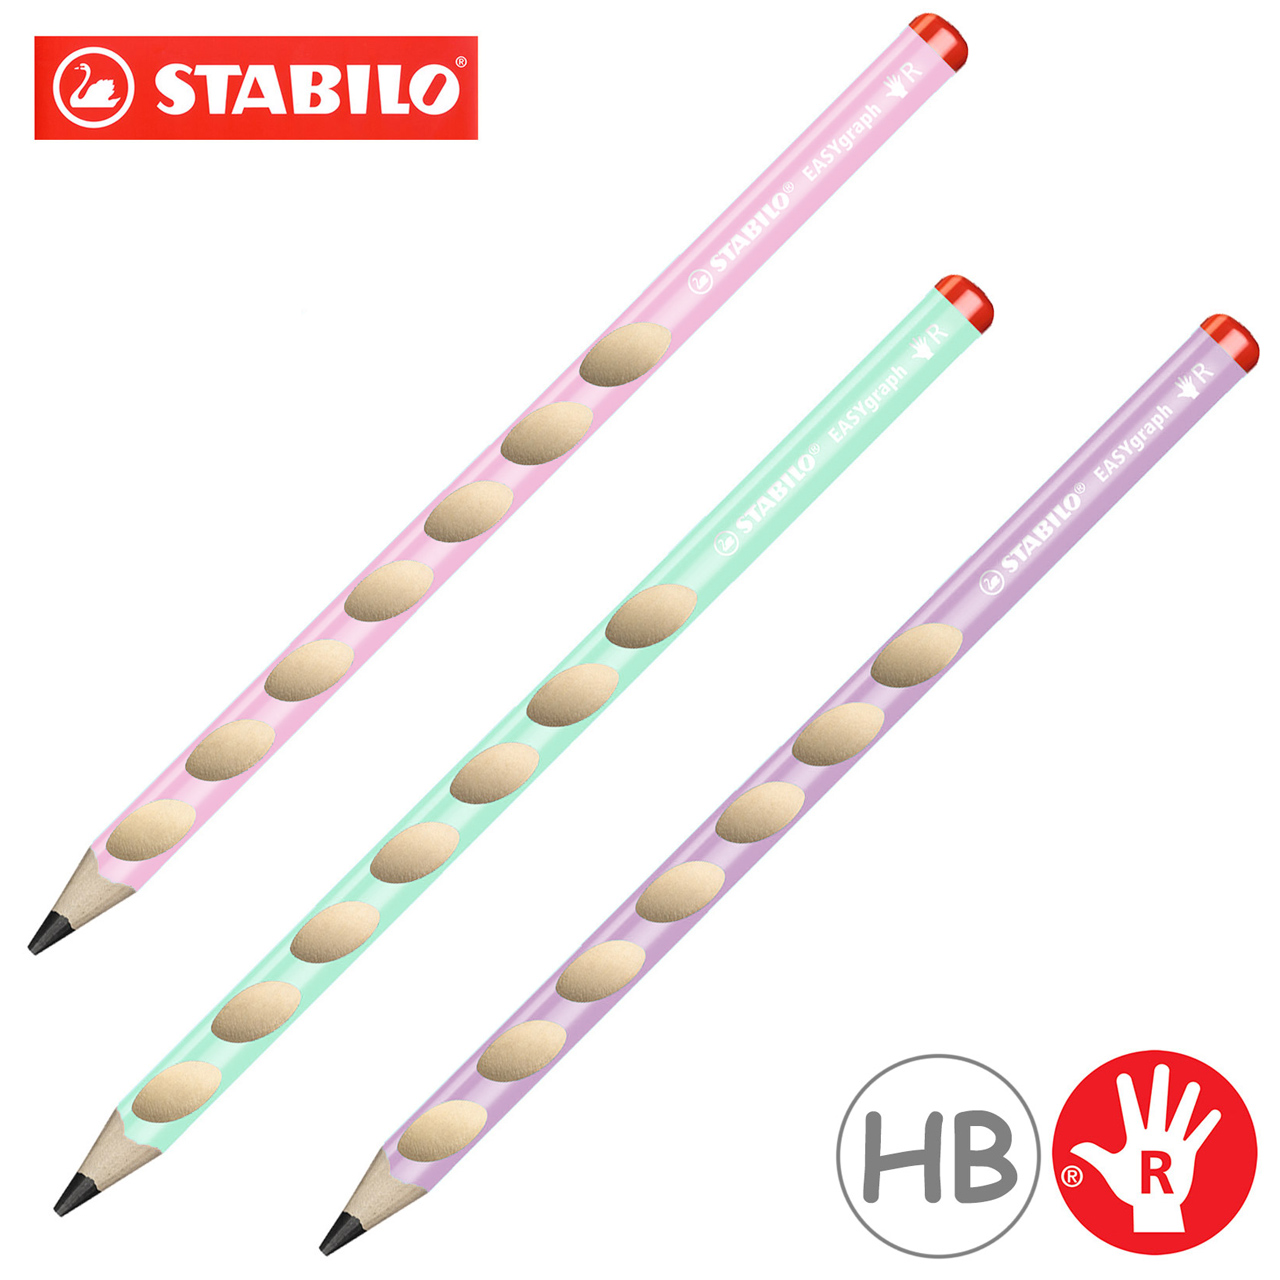 Stabilo-easy-graph-Bleistift-HB-pastell-pink-gruen-lila-Rechtshaender-lafueliki